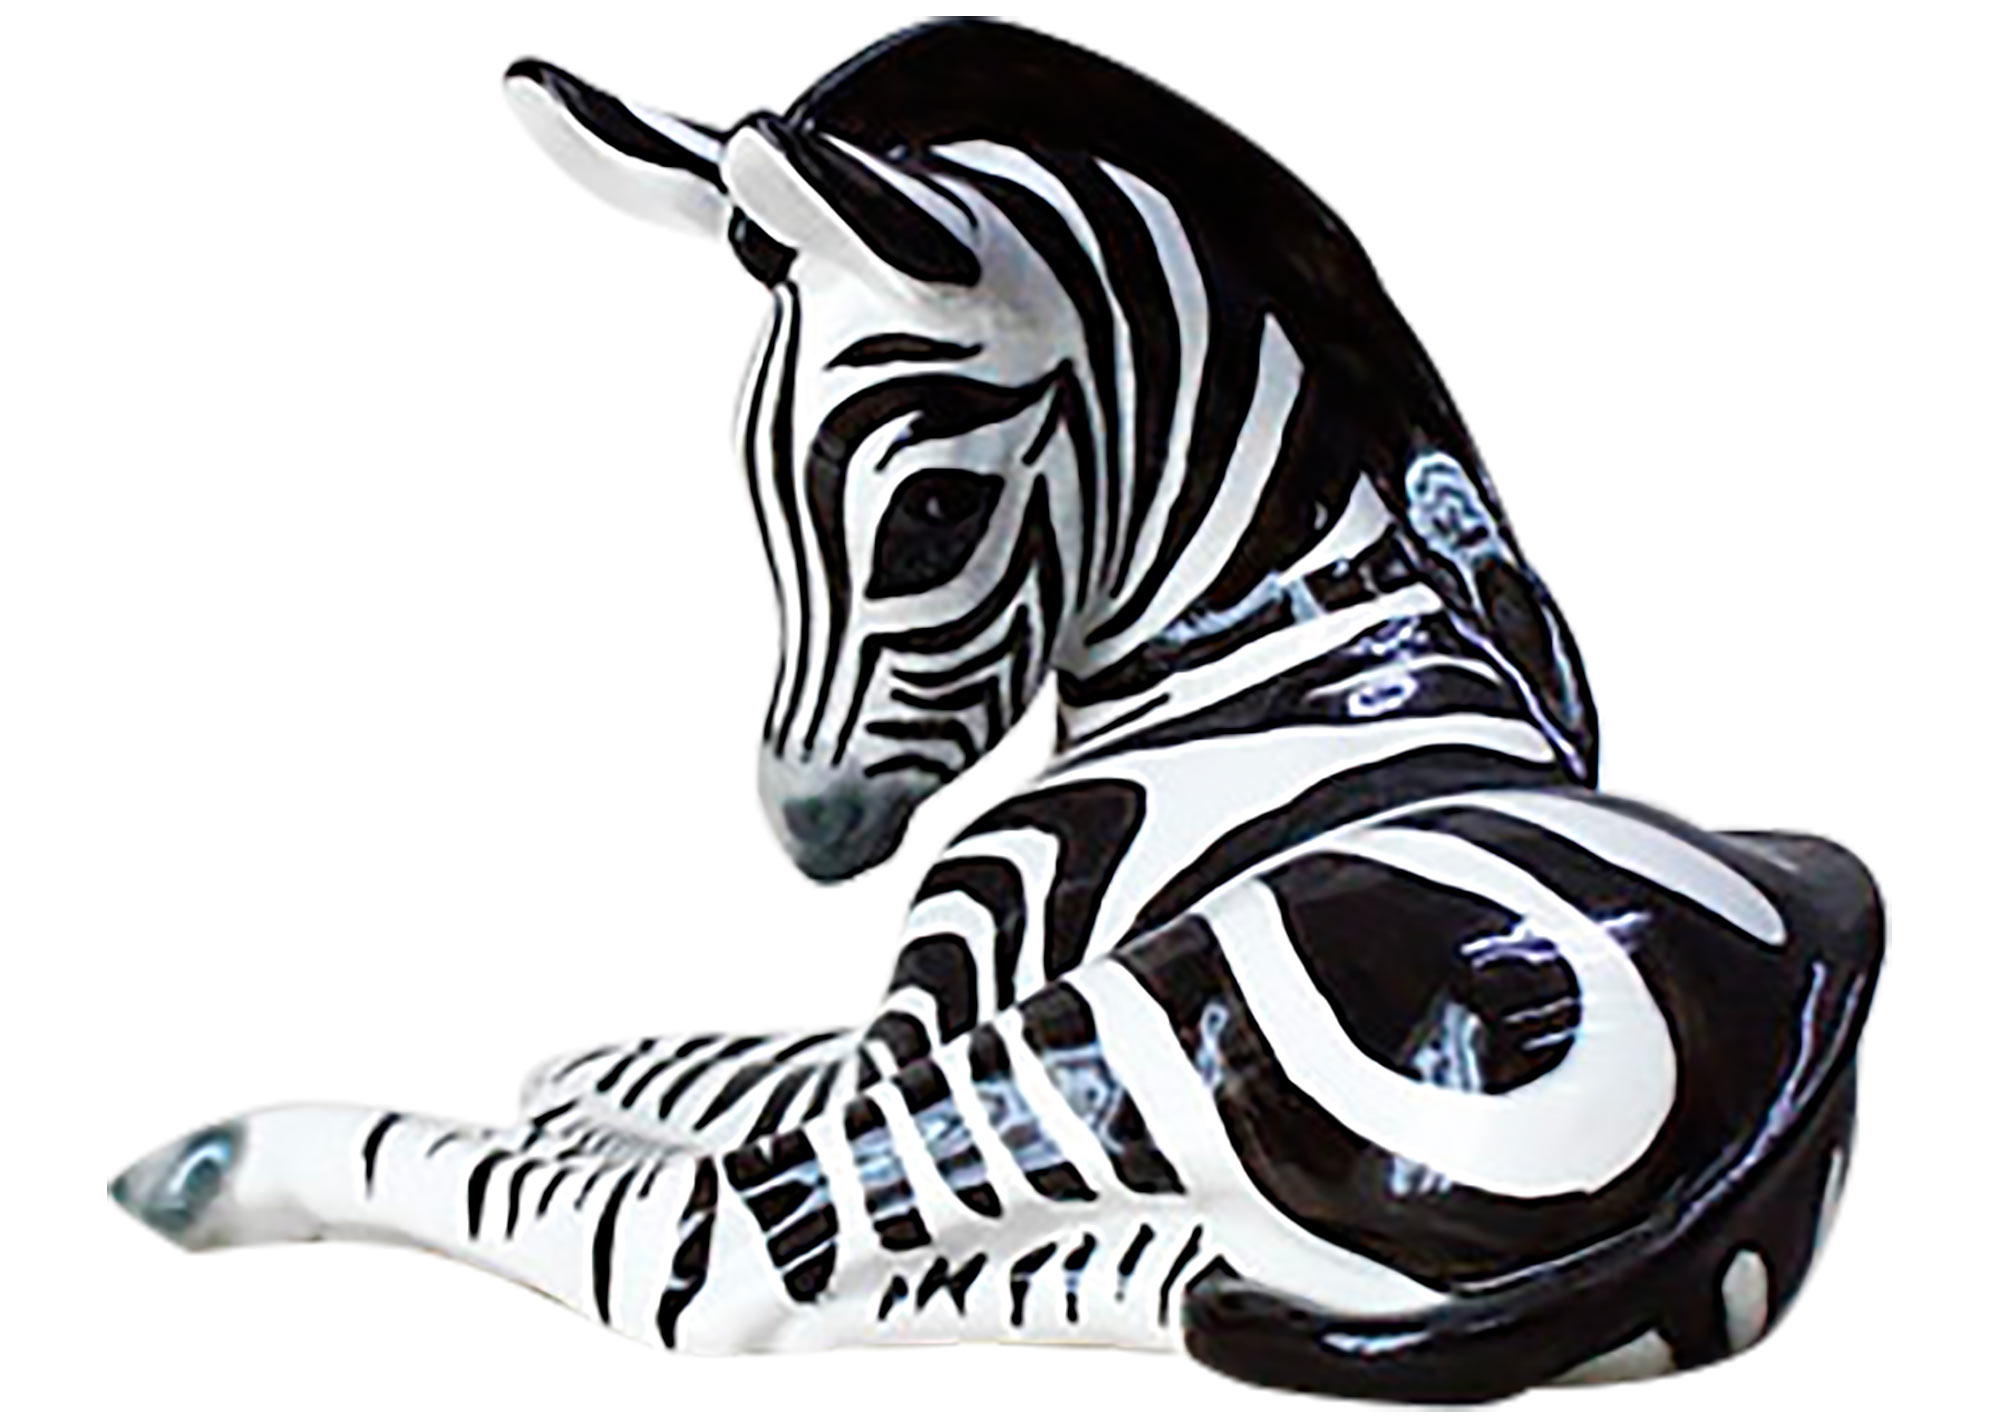 Buy Large Zebra Figurine at GoldenCockerel.com